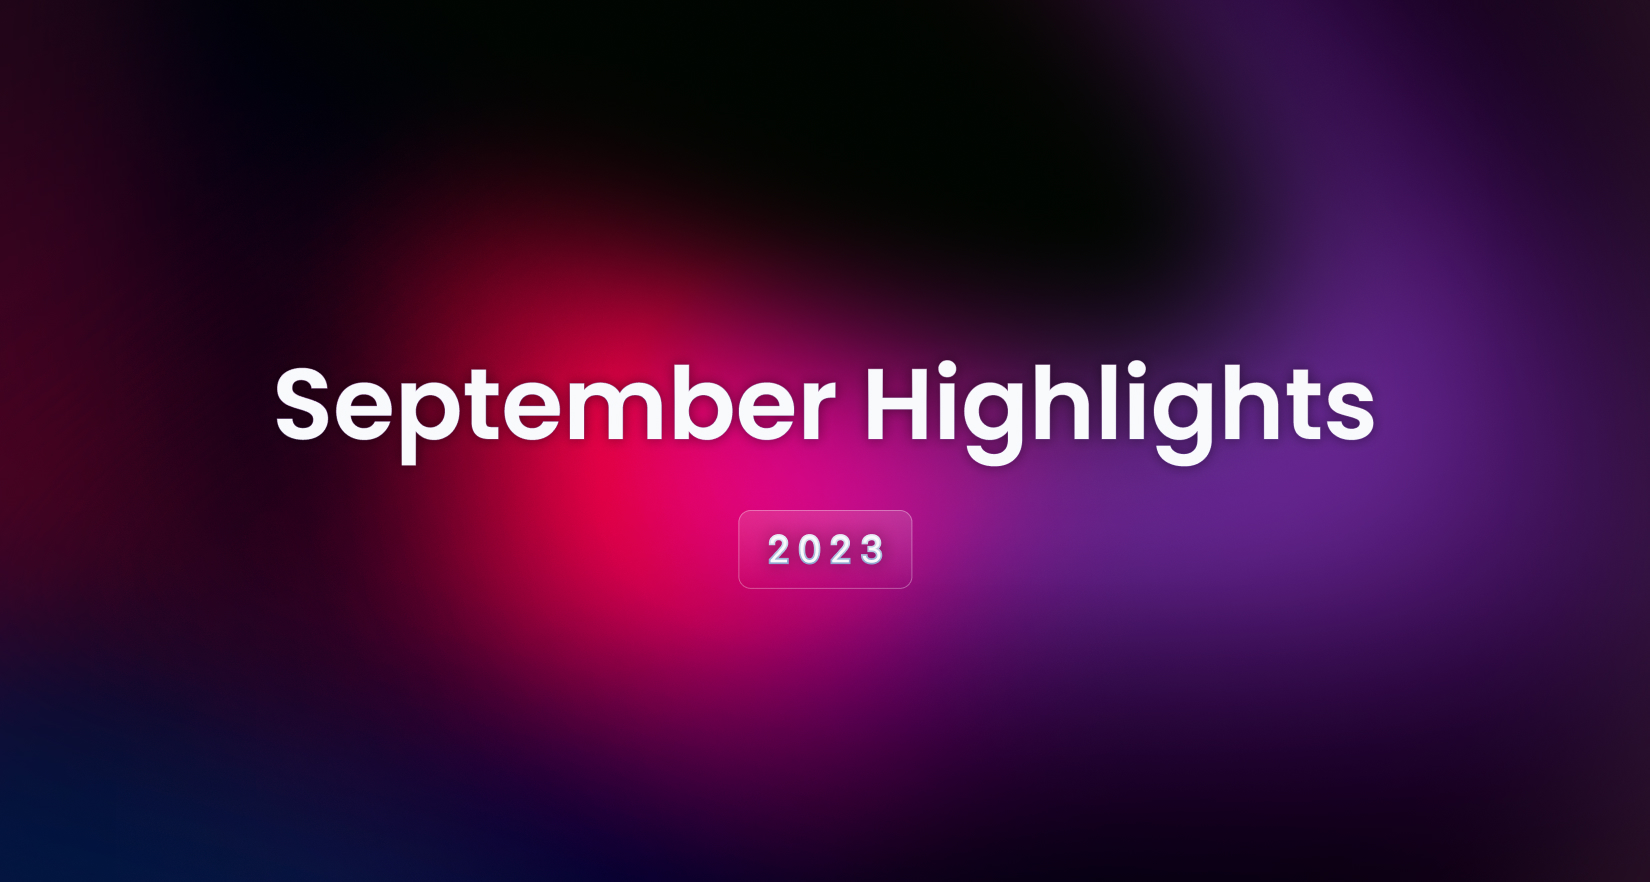 September 2023 Highlights